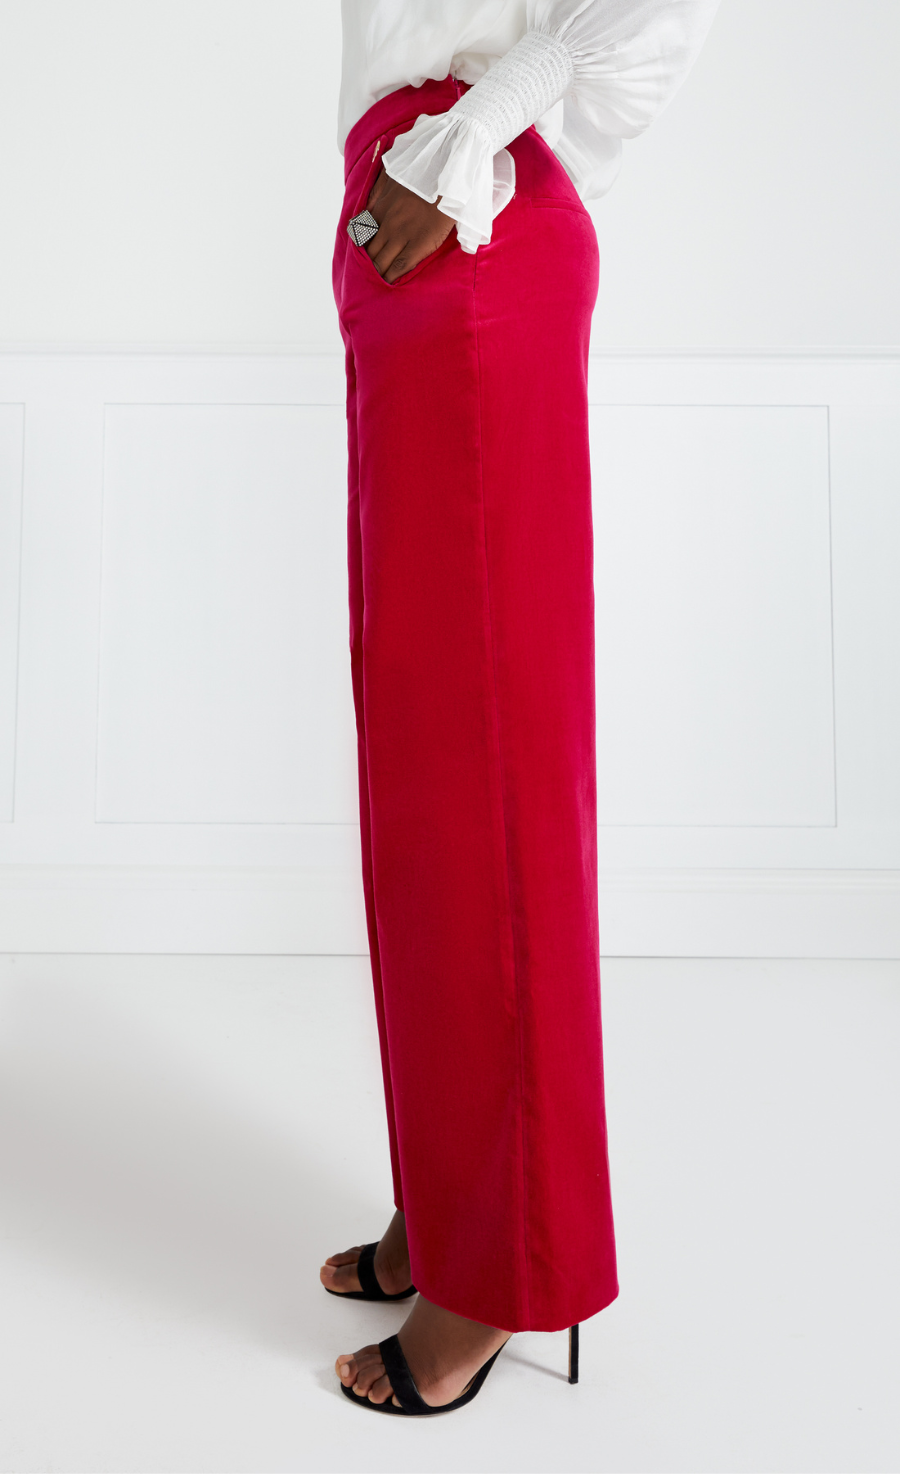 Clove Velvet Waisted Trousers - Hot Pink